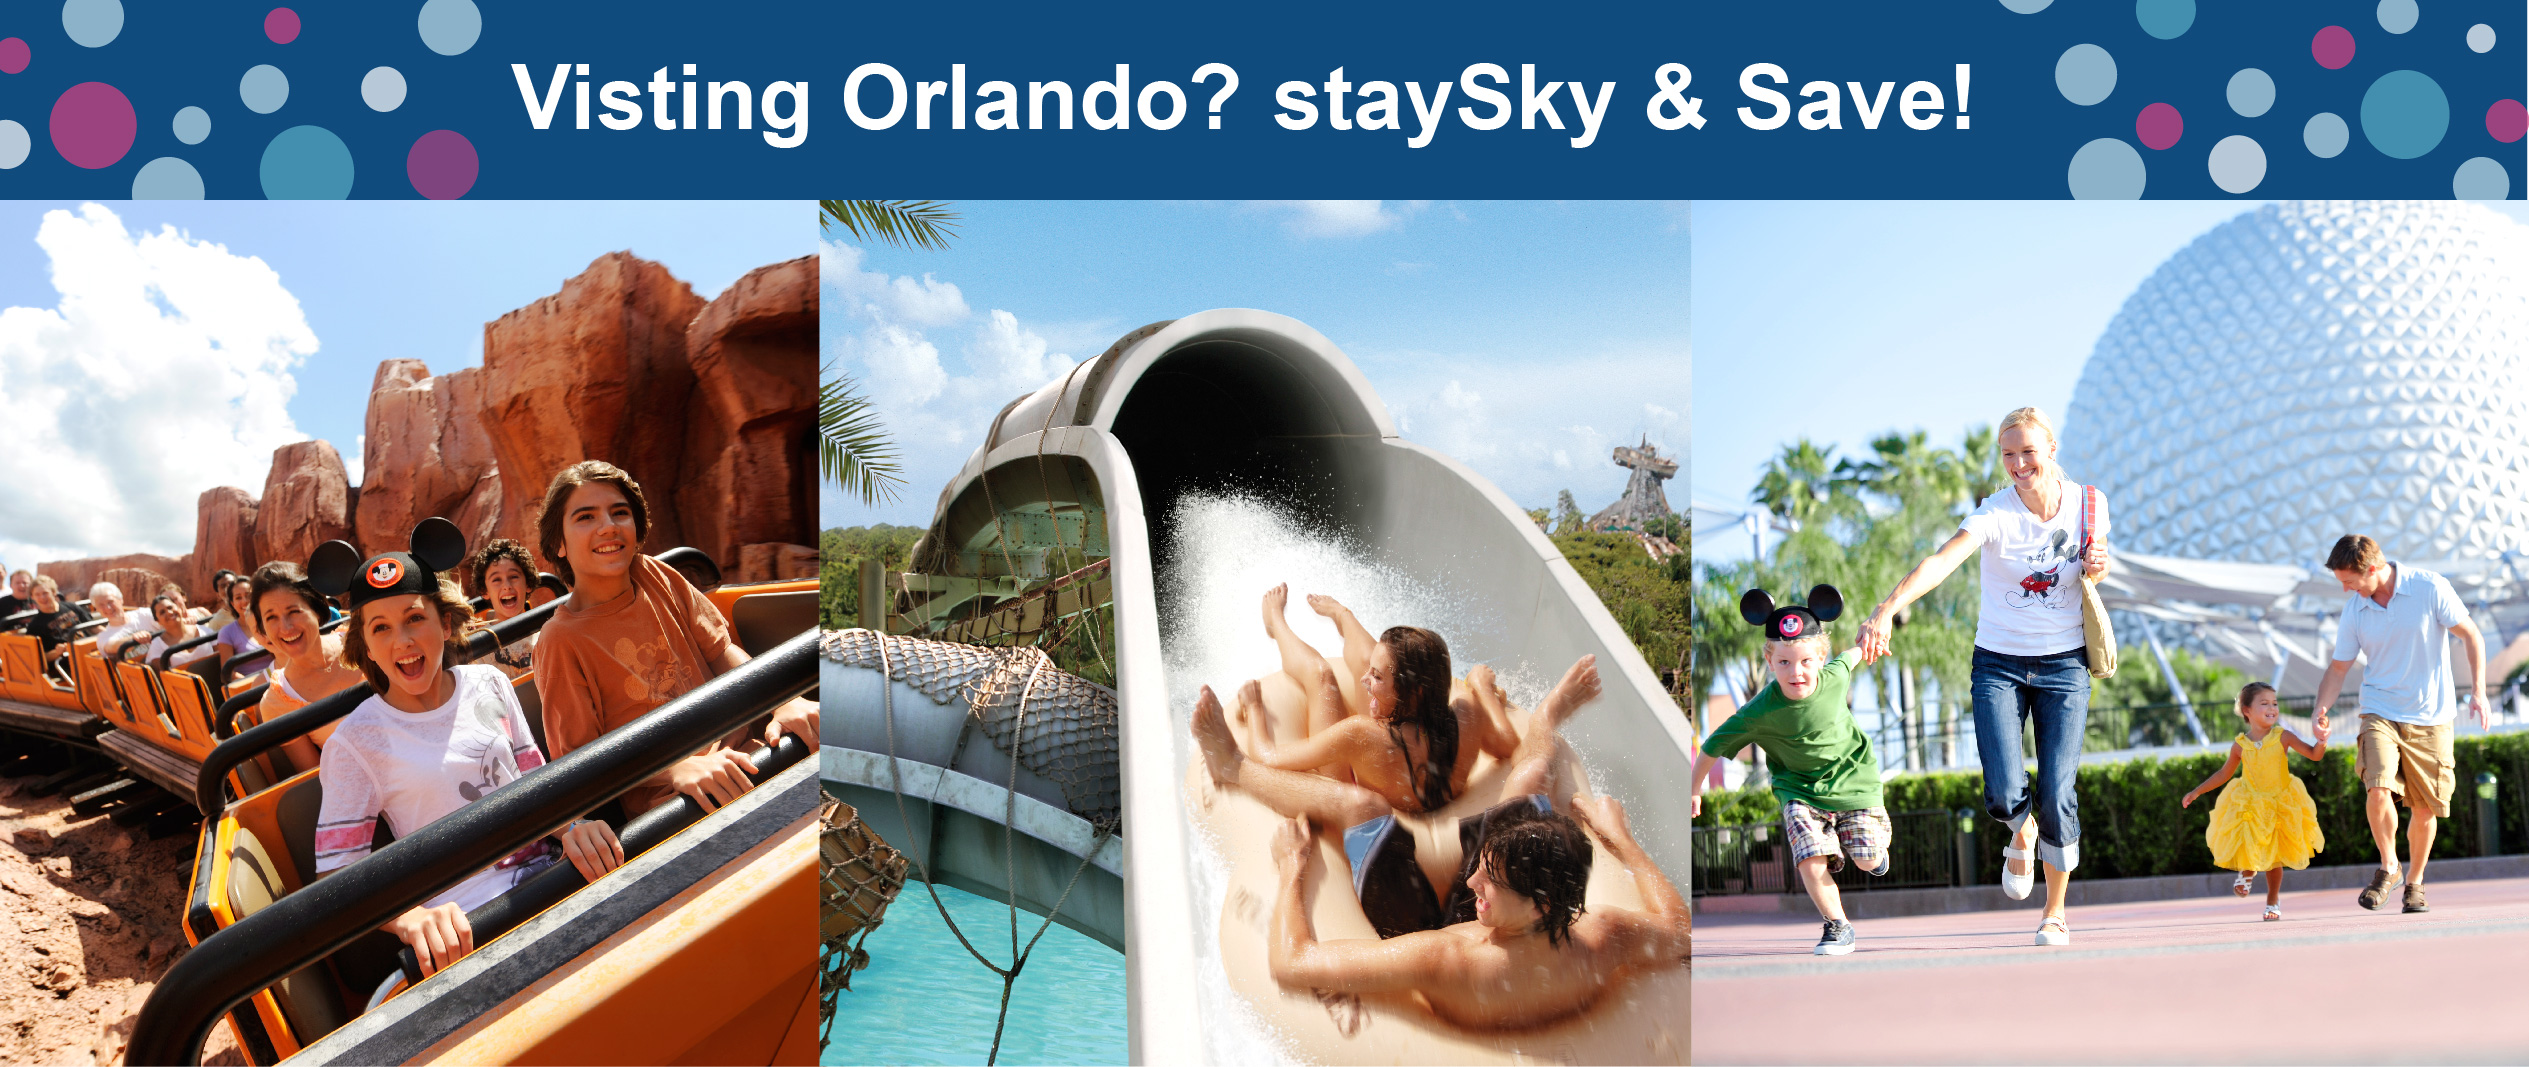 Visting Orlando? staySky & Save!